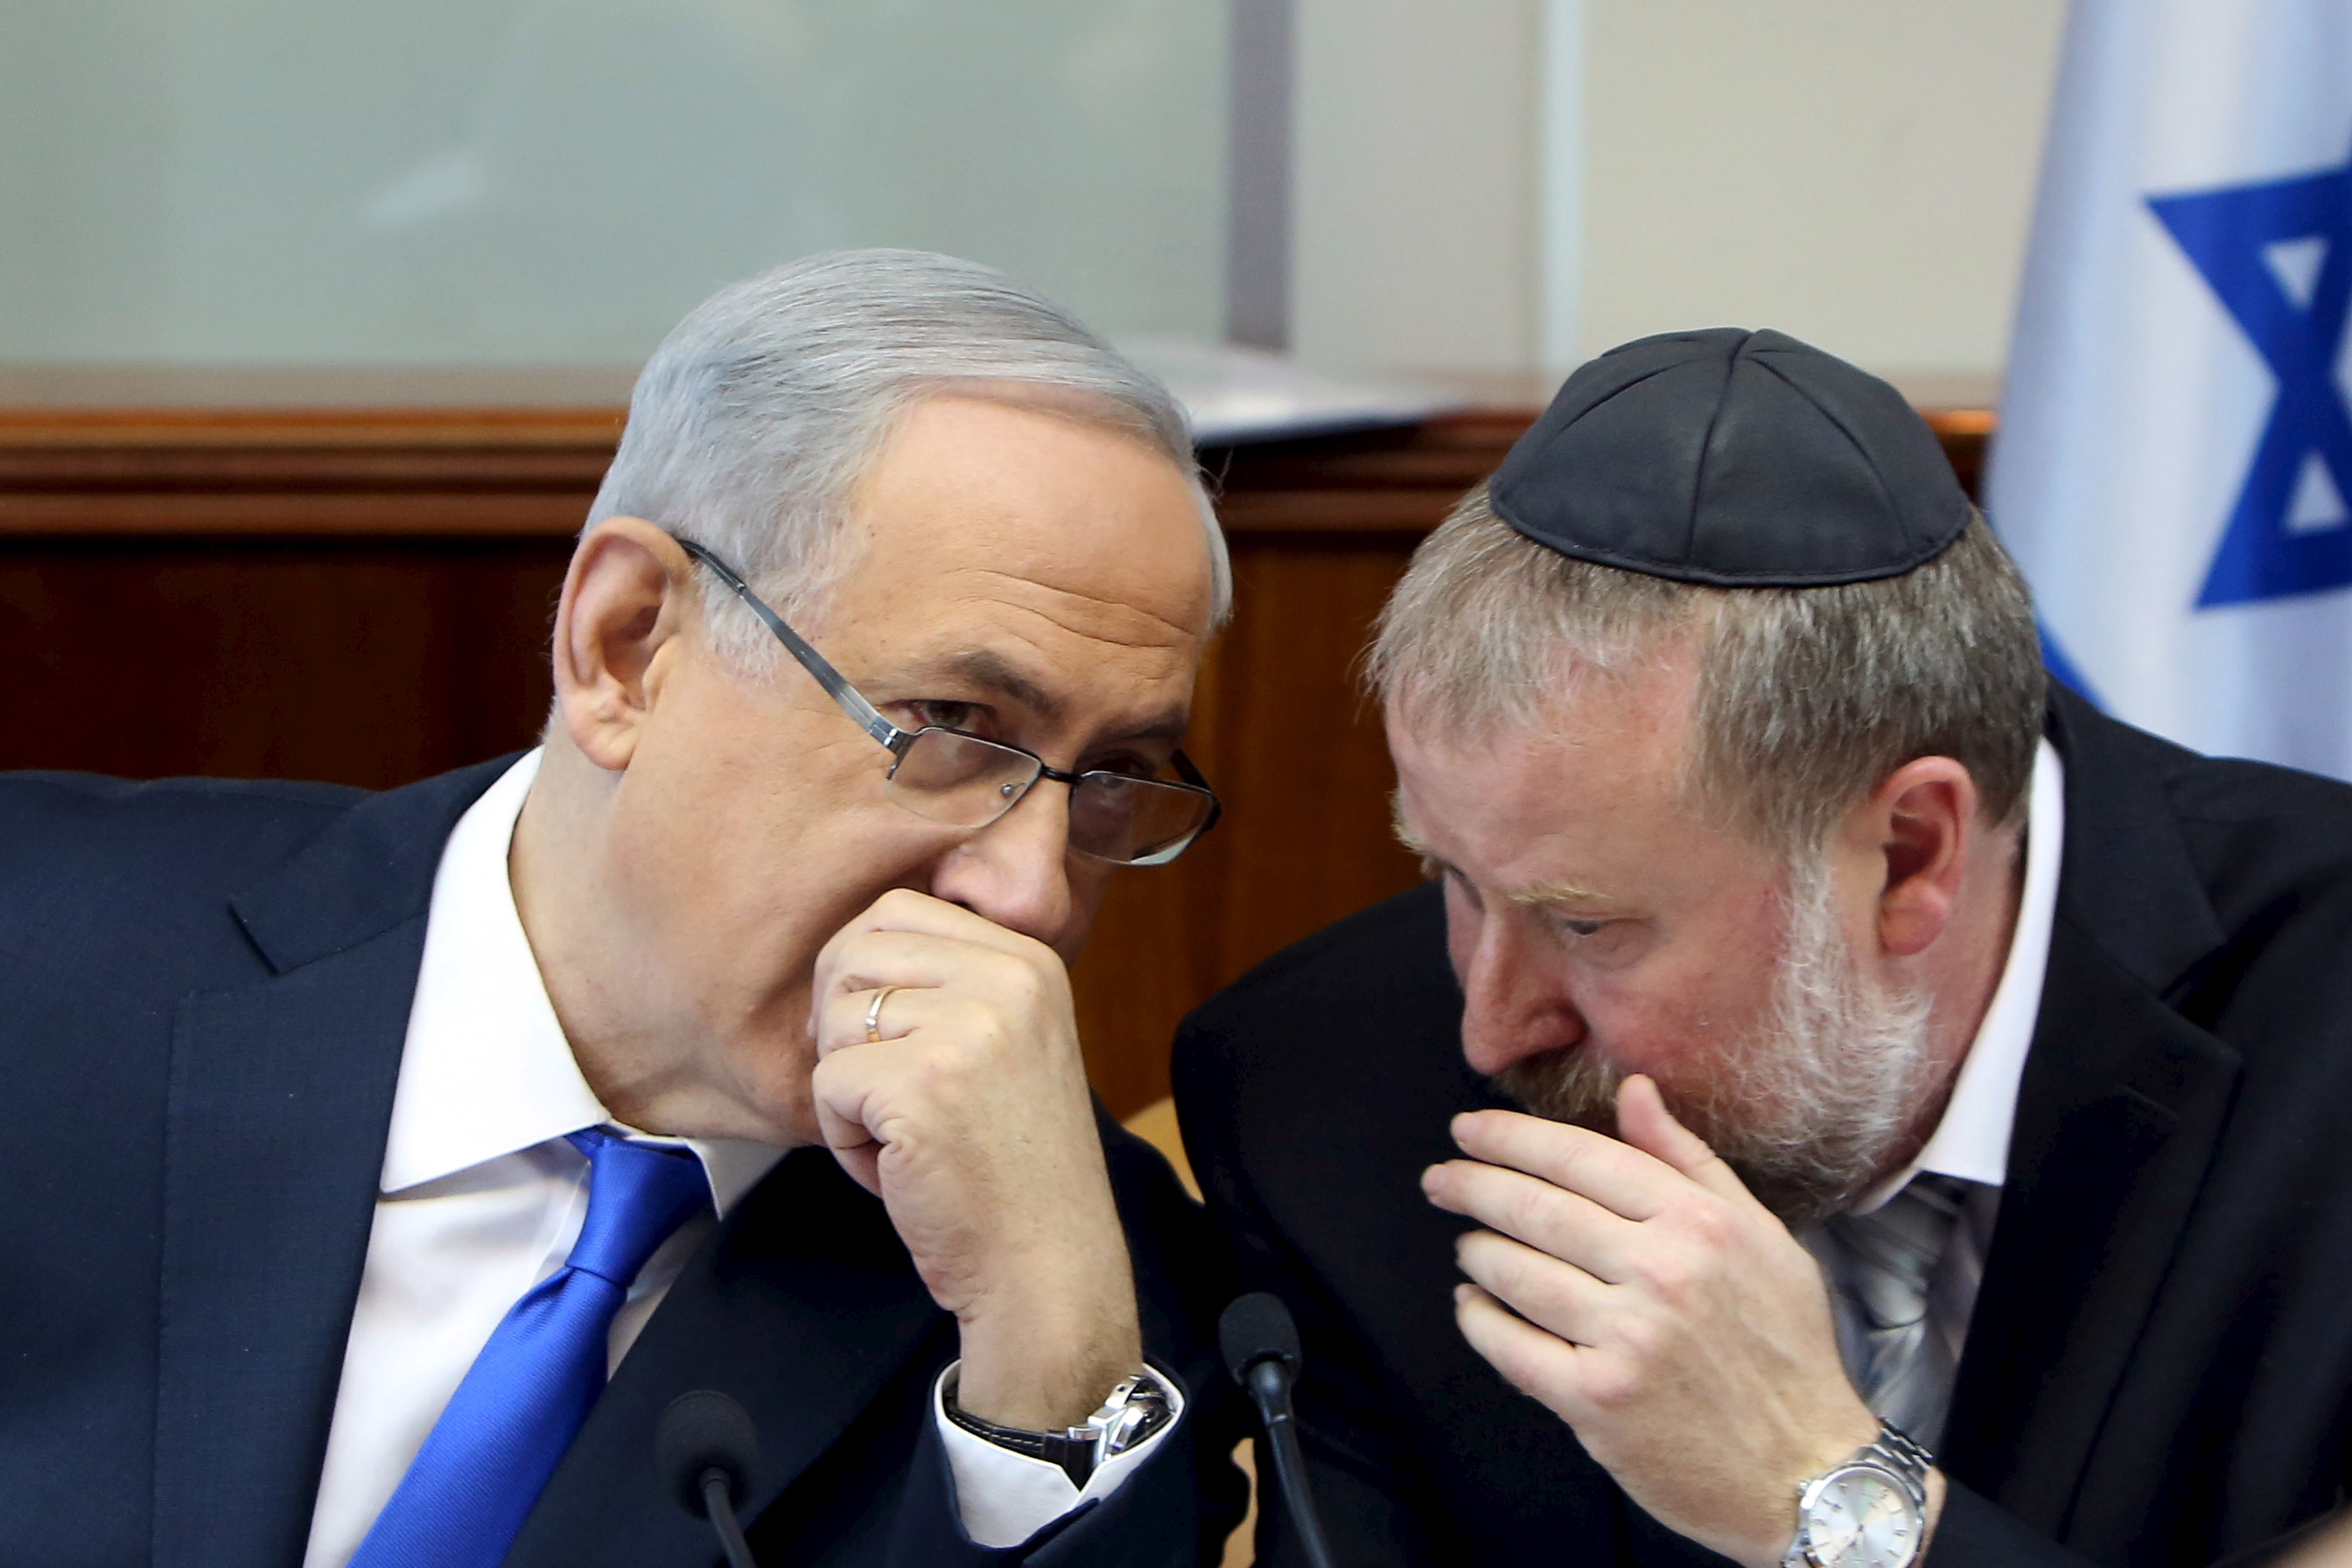 Israeli Prime Minister Benjamin Netanyahu (L) speaks with Cabinet Secretary Avichai Mandelblit during the weekly cabinet meeting in Jerusalem December 20, 2015. REUTERS/Gali Tibbon/Pool - GF10000271896